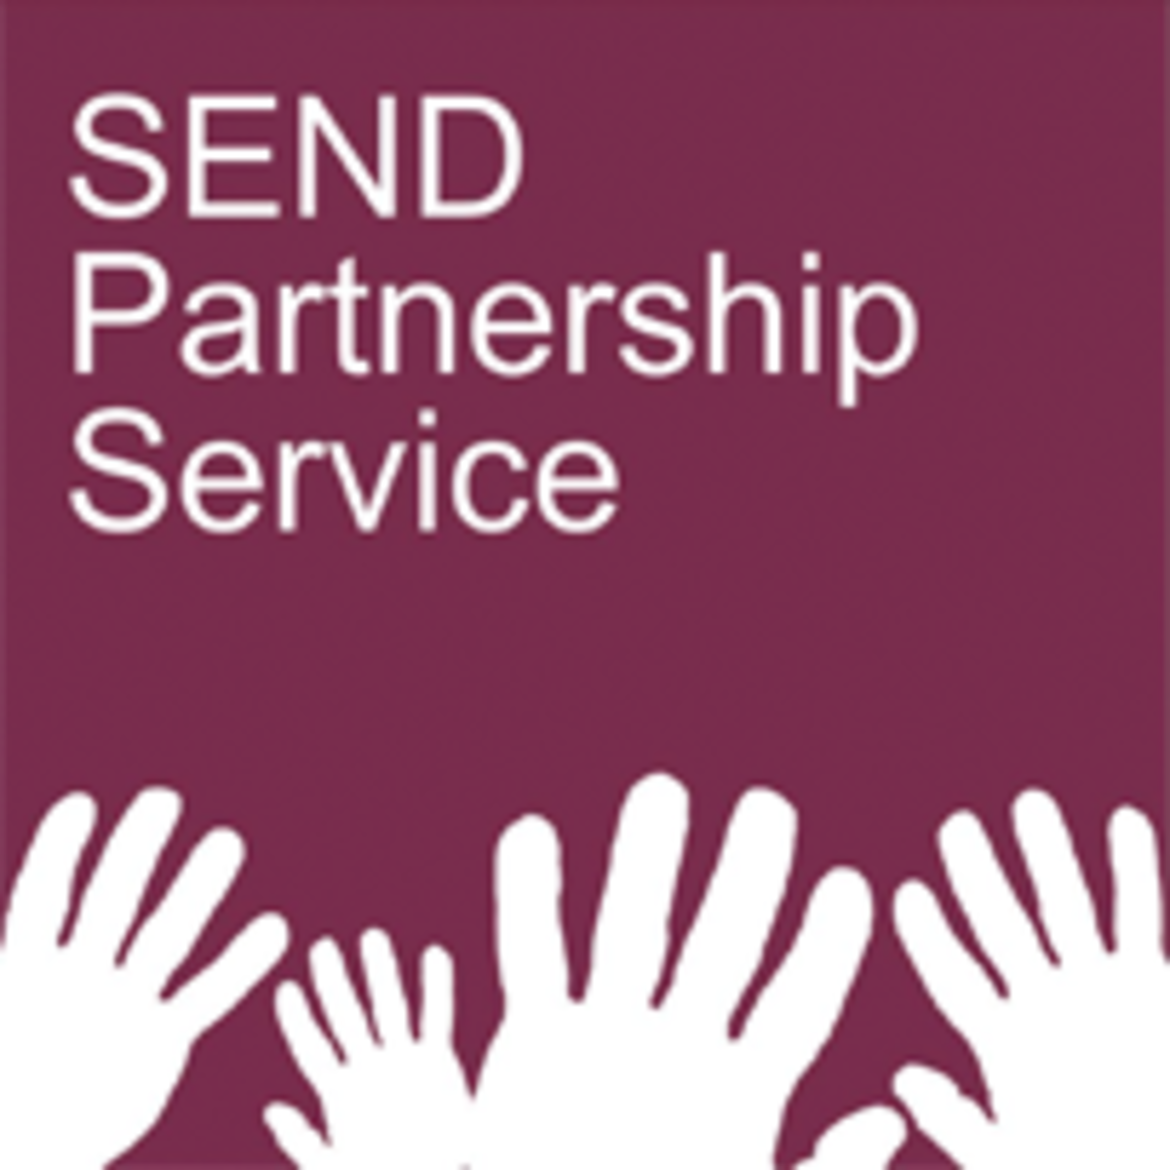 SEND Partnership Service Annual Report 2020-2021